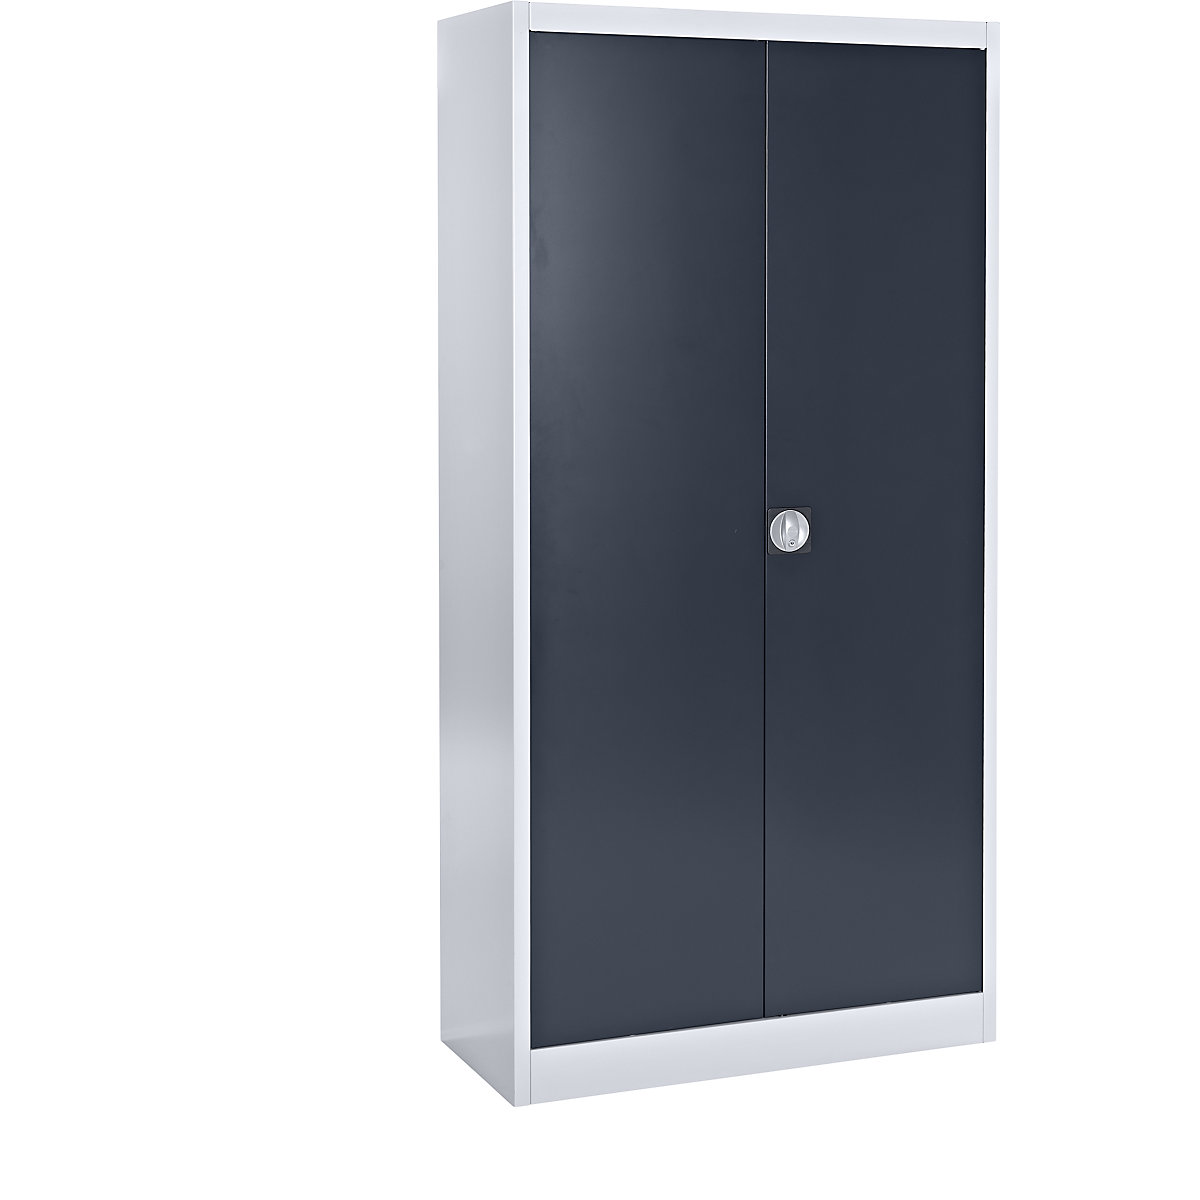 Steel cupboard with flush doors - mauser